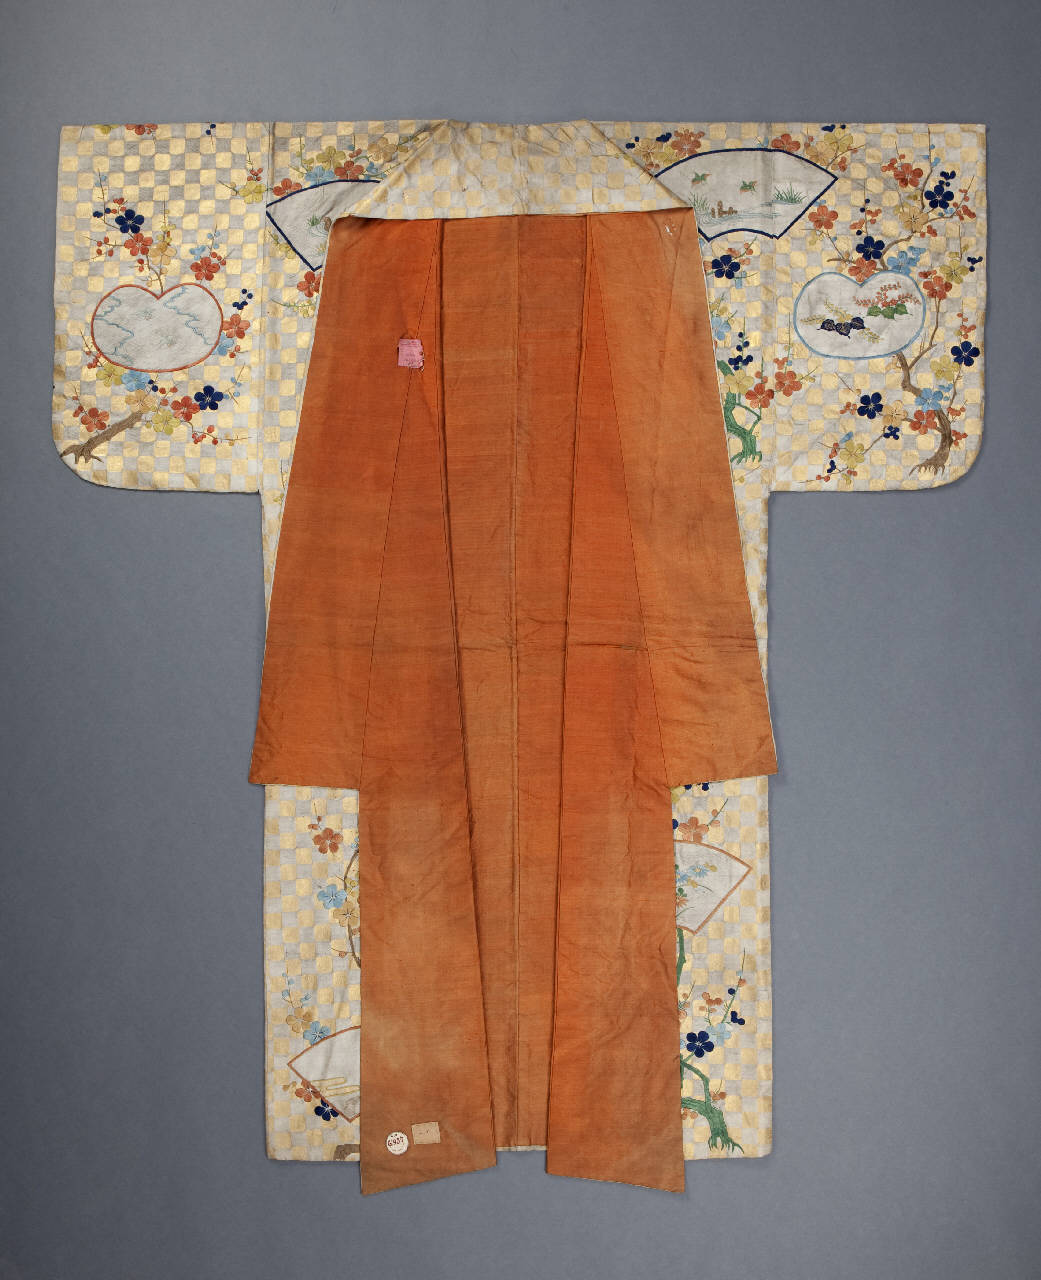 motivi decorativi vegetali, gru, ideogrammi (abito) - manifattura giapponese (secc. XVIII/ XIX)